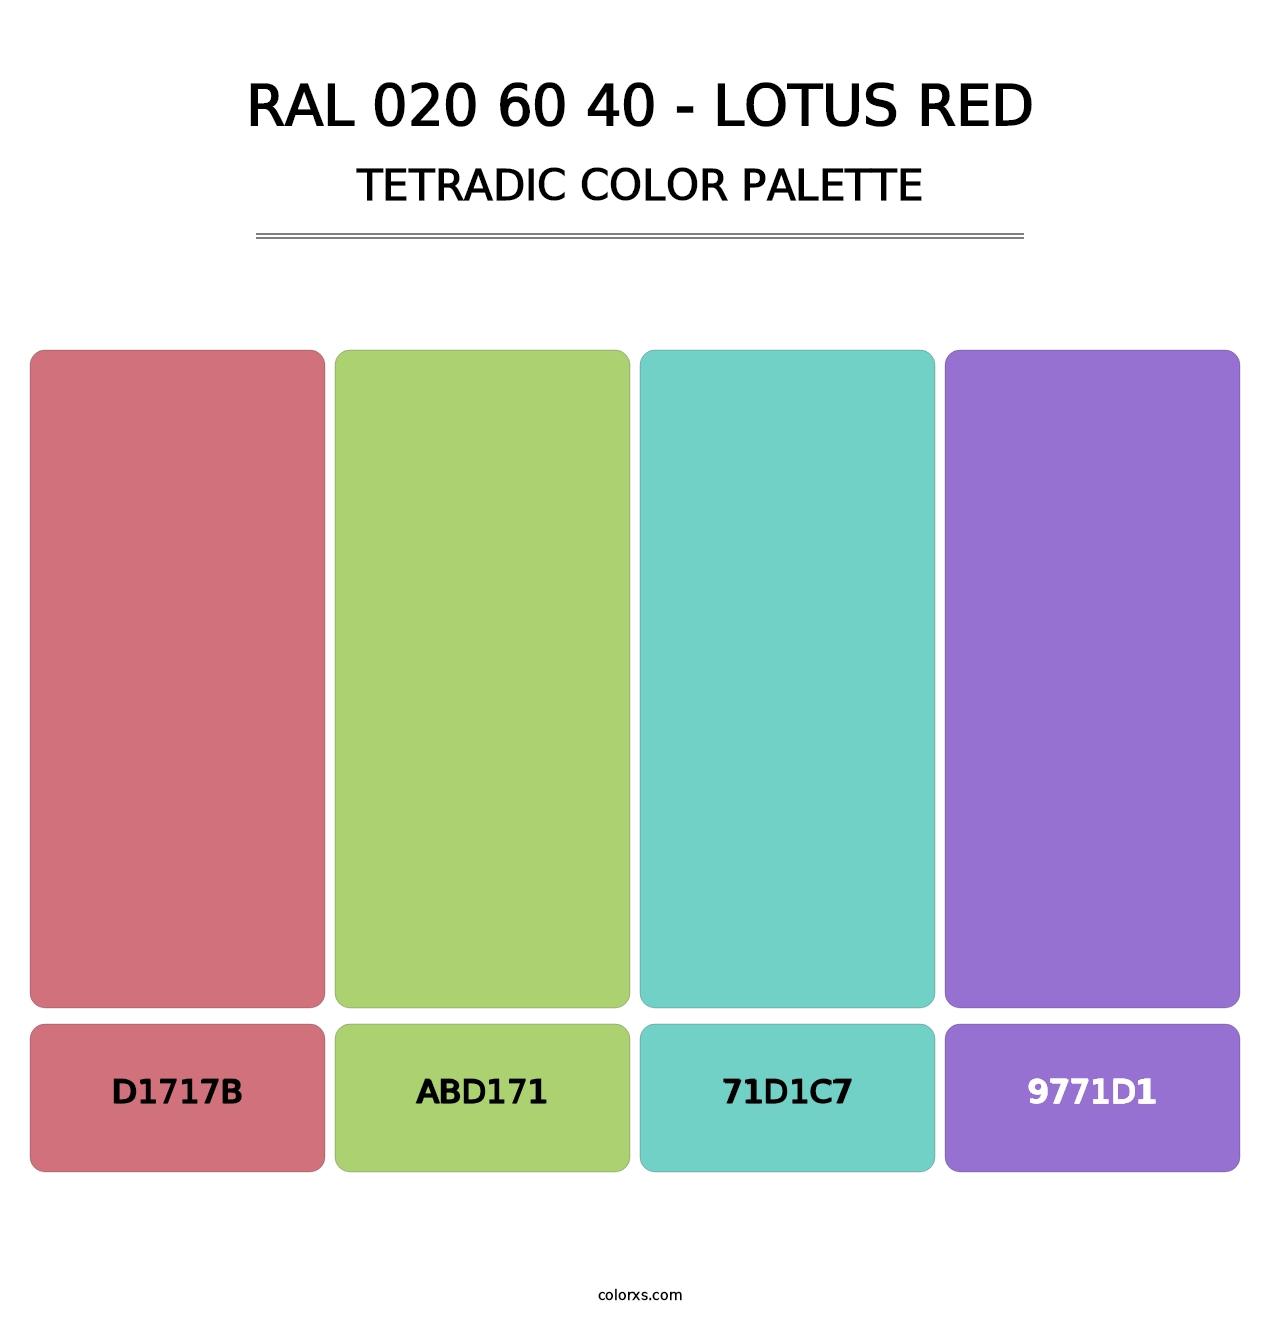 RAL 020 60 40 - Lotus Red - Tetradic Color Palette